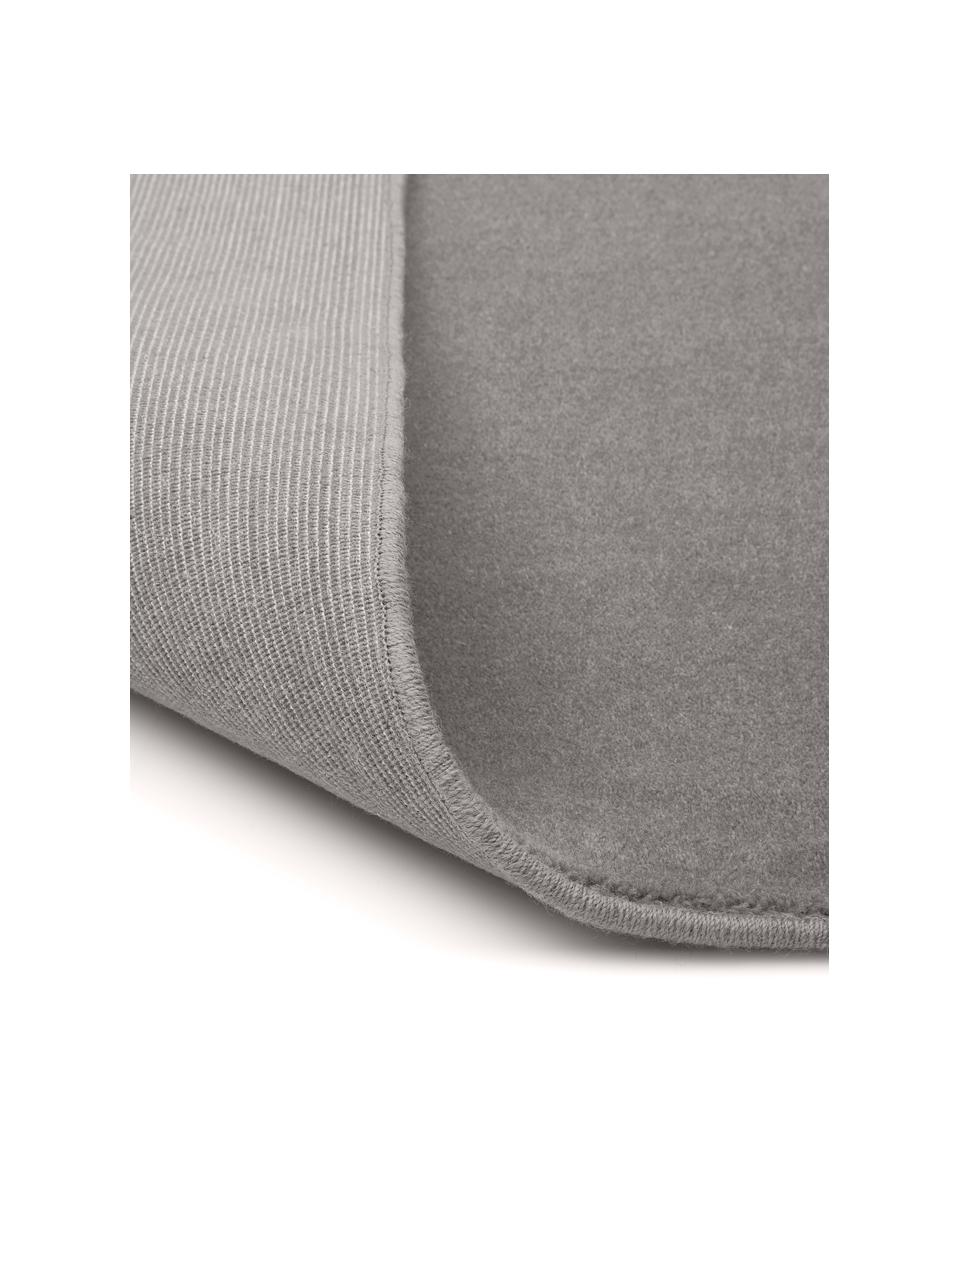 Wollen loper Ida in grijs, Bovenzijde: 100% wol, Onderzijde: 60% jute, 40% polyester B, Grijs, B 80 x L 250 cm